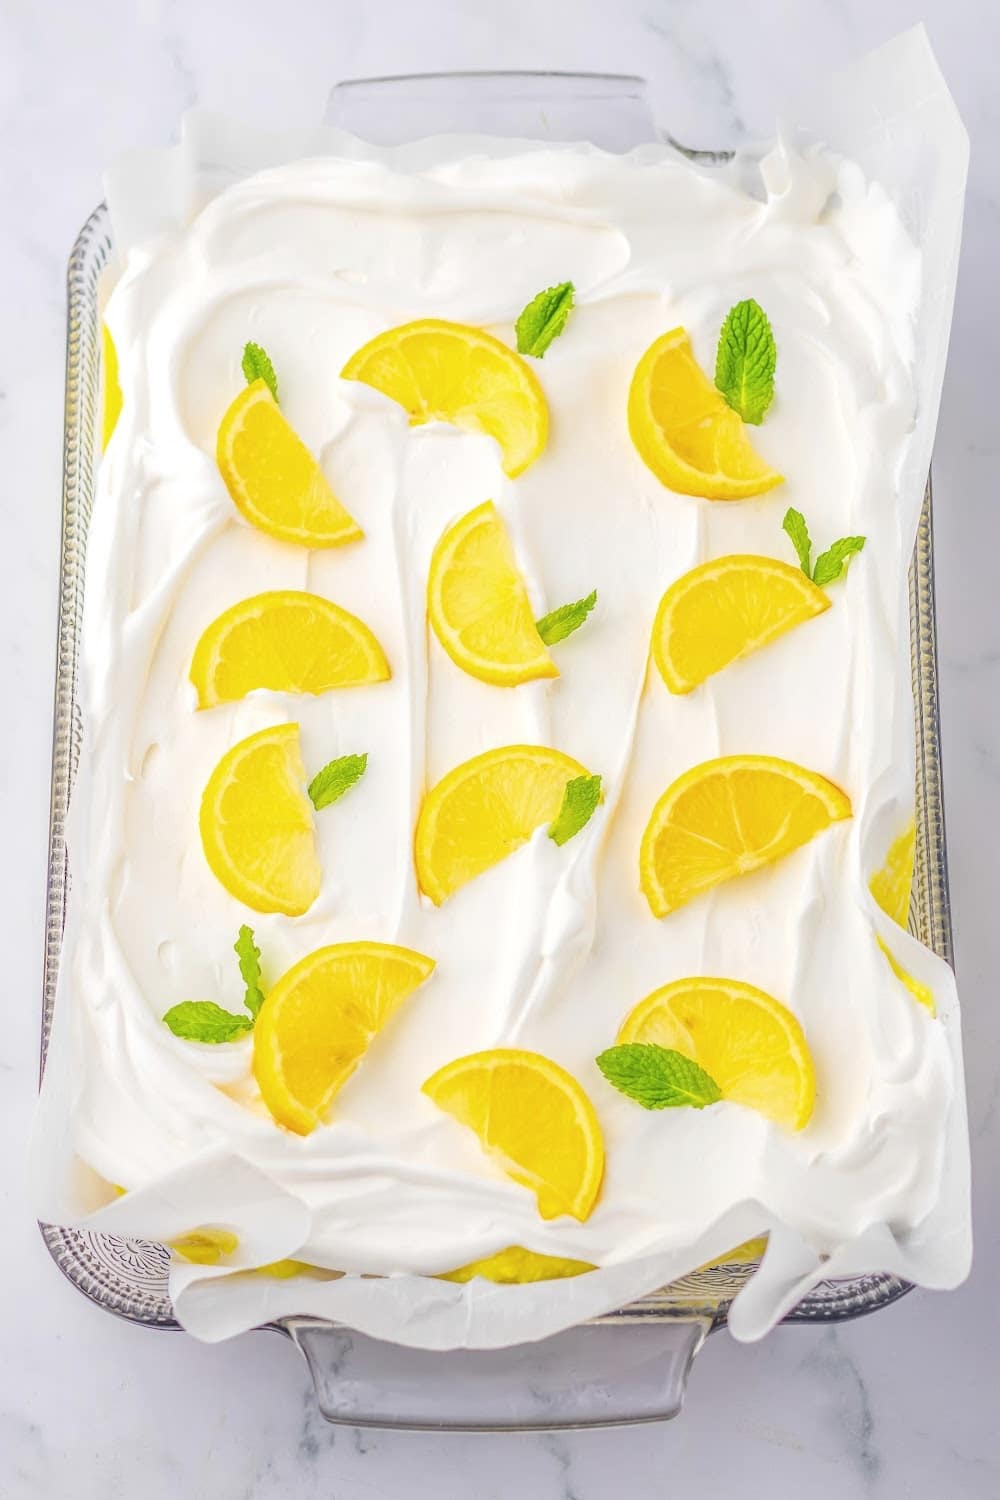 The finished Lemon Icebox Cake topped with fresh lemon slices and mint.